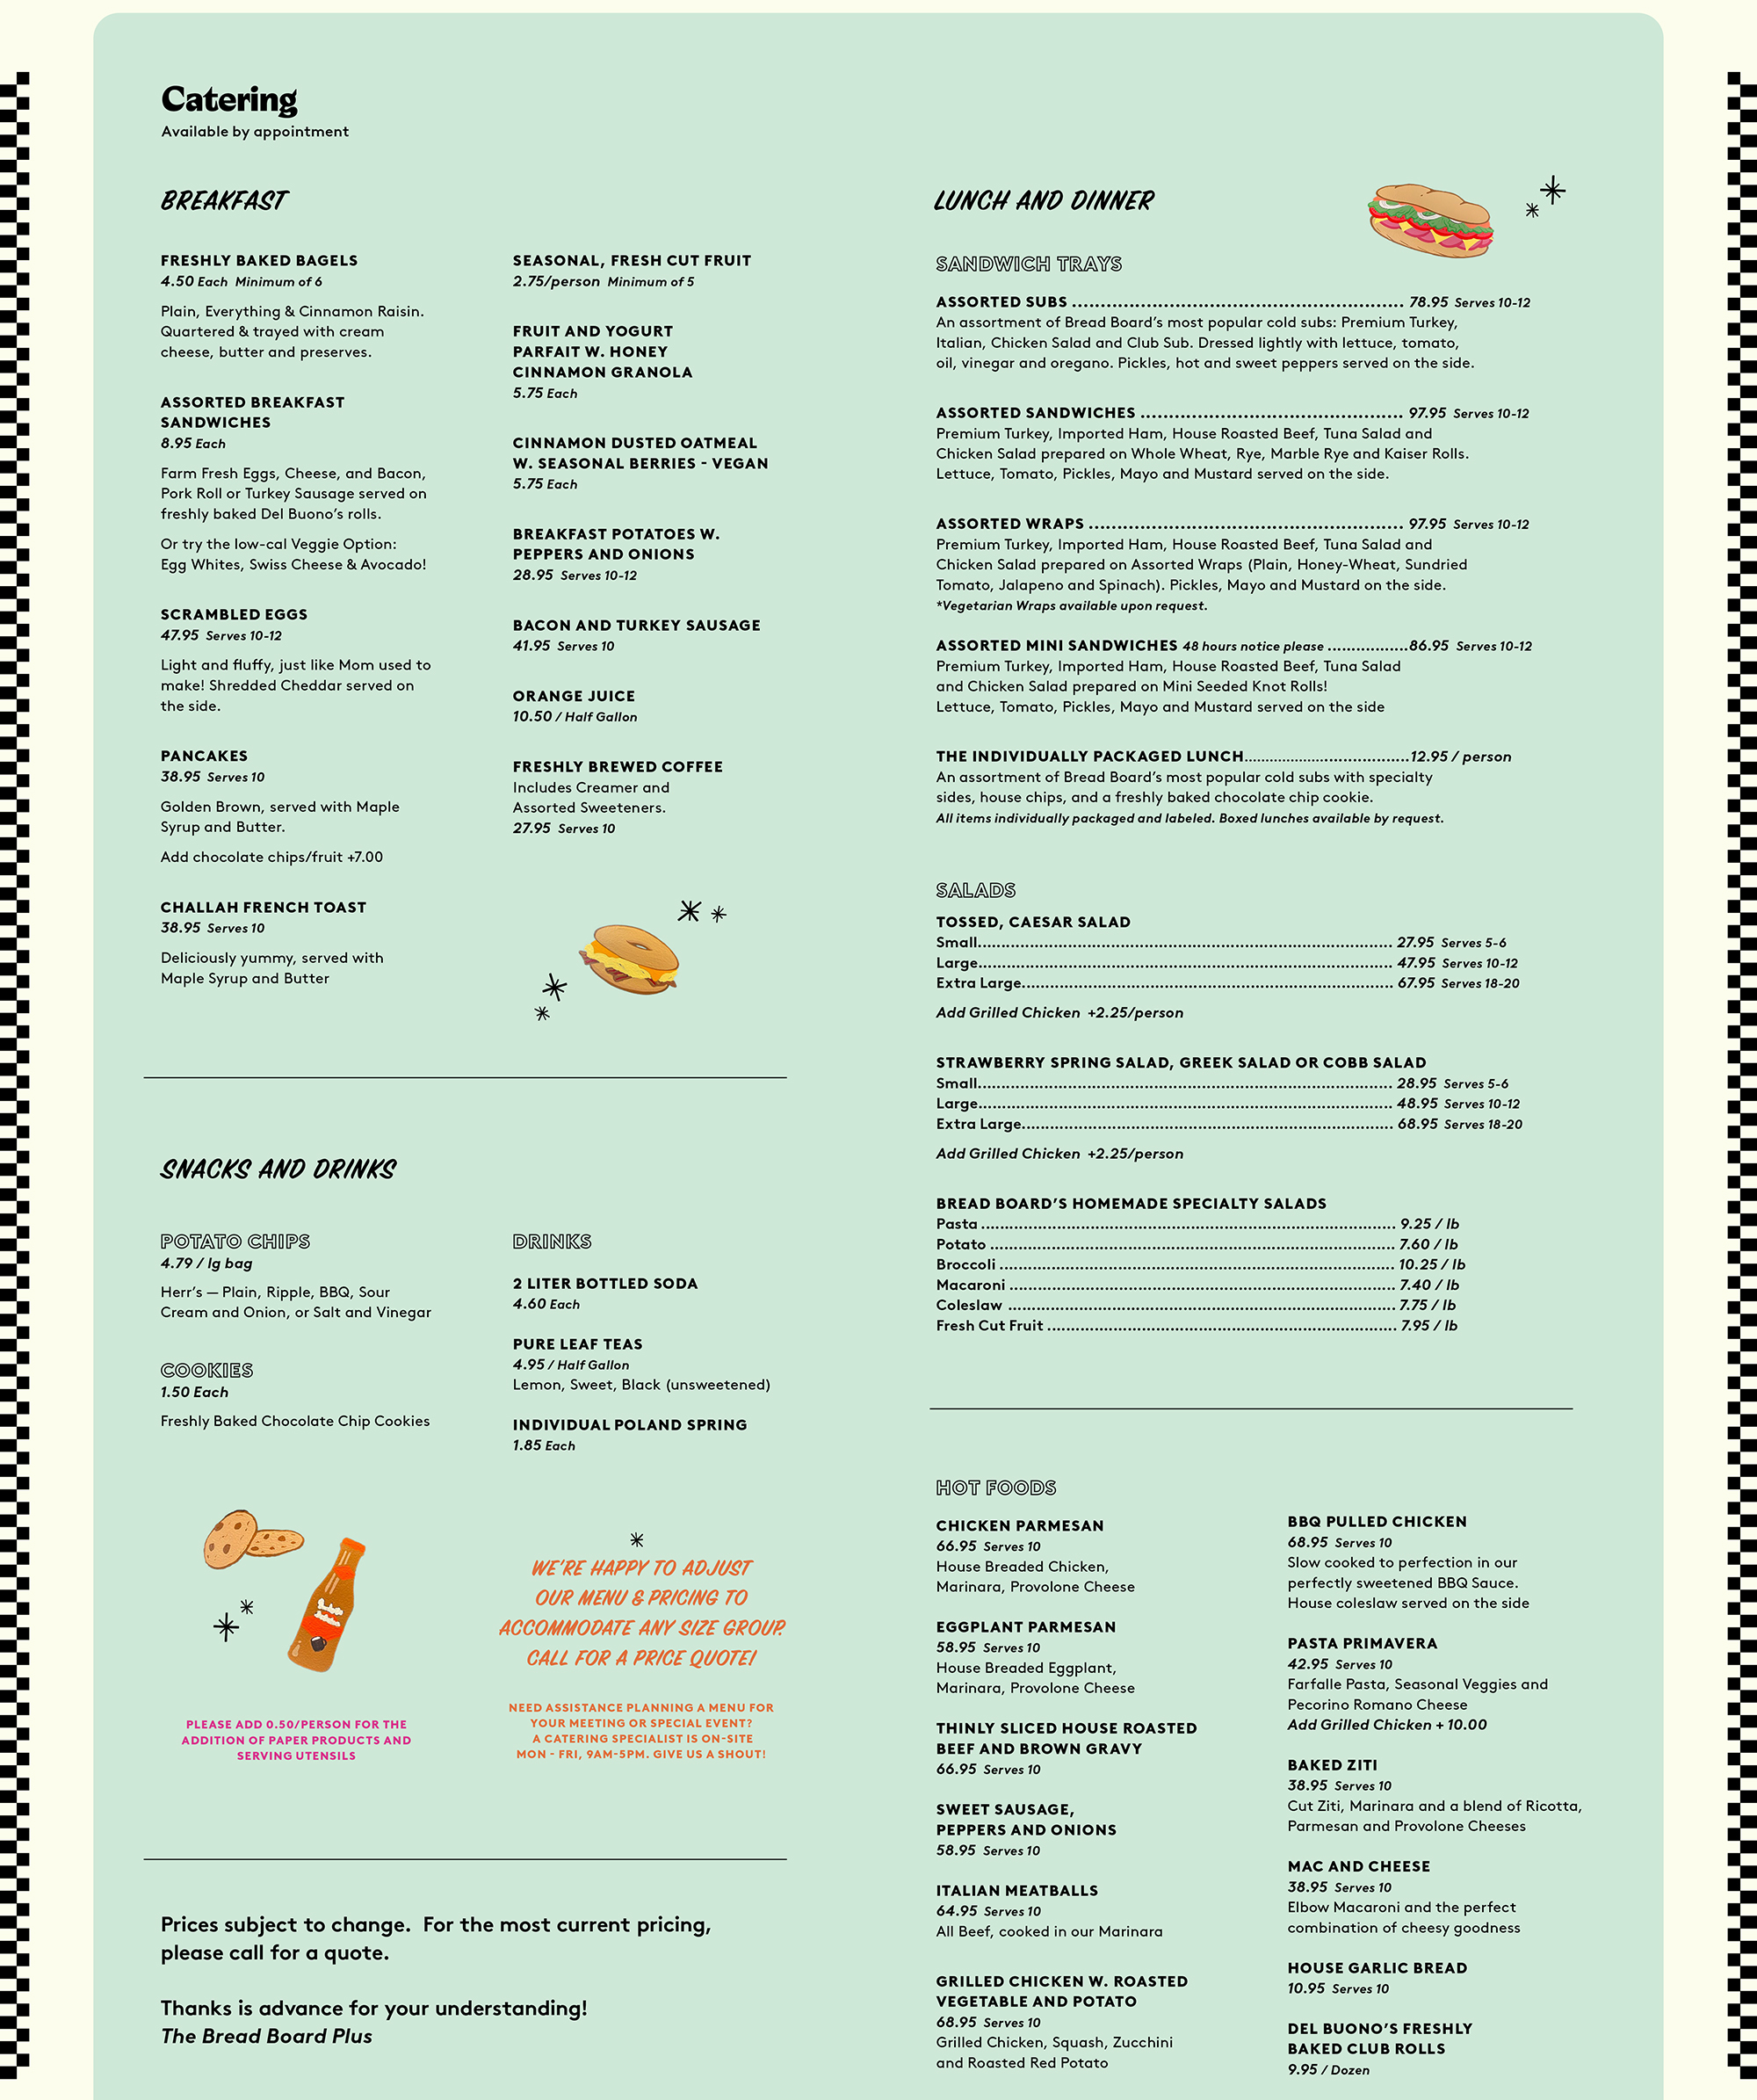 bread board catering menu